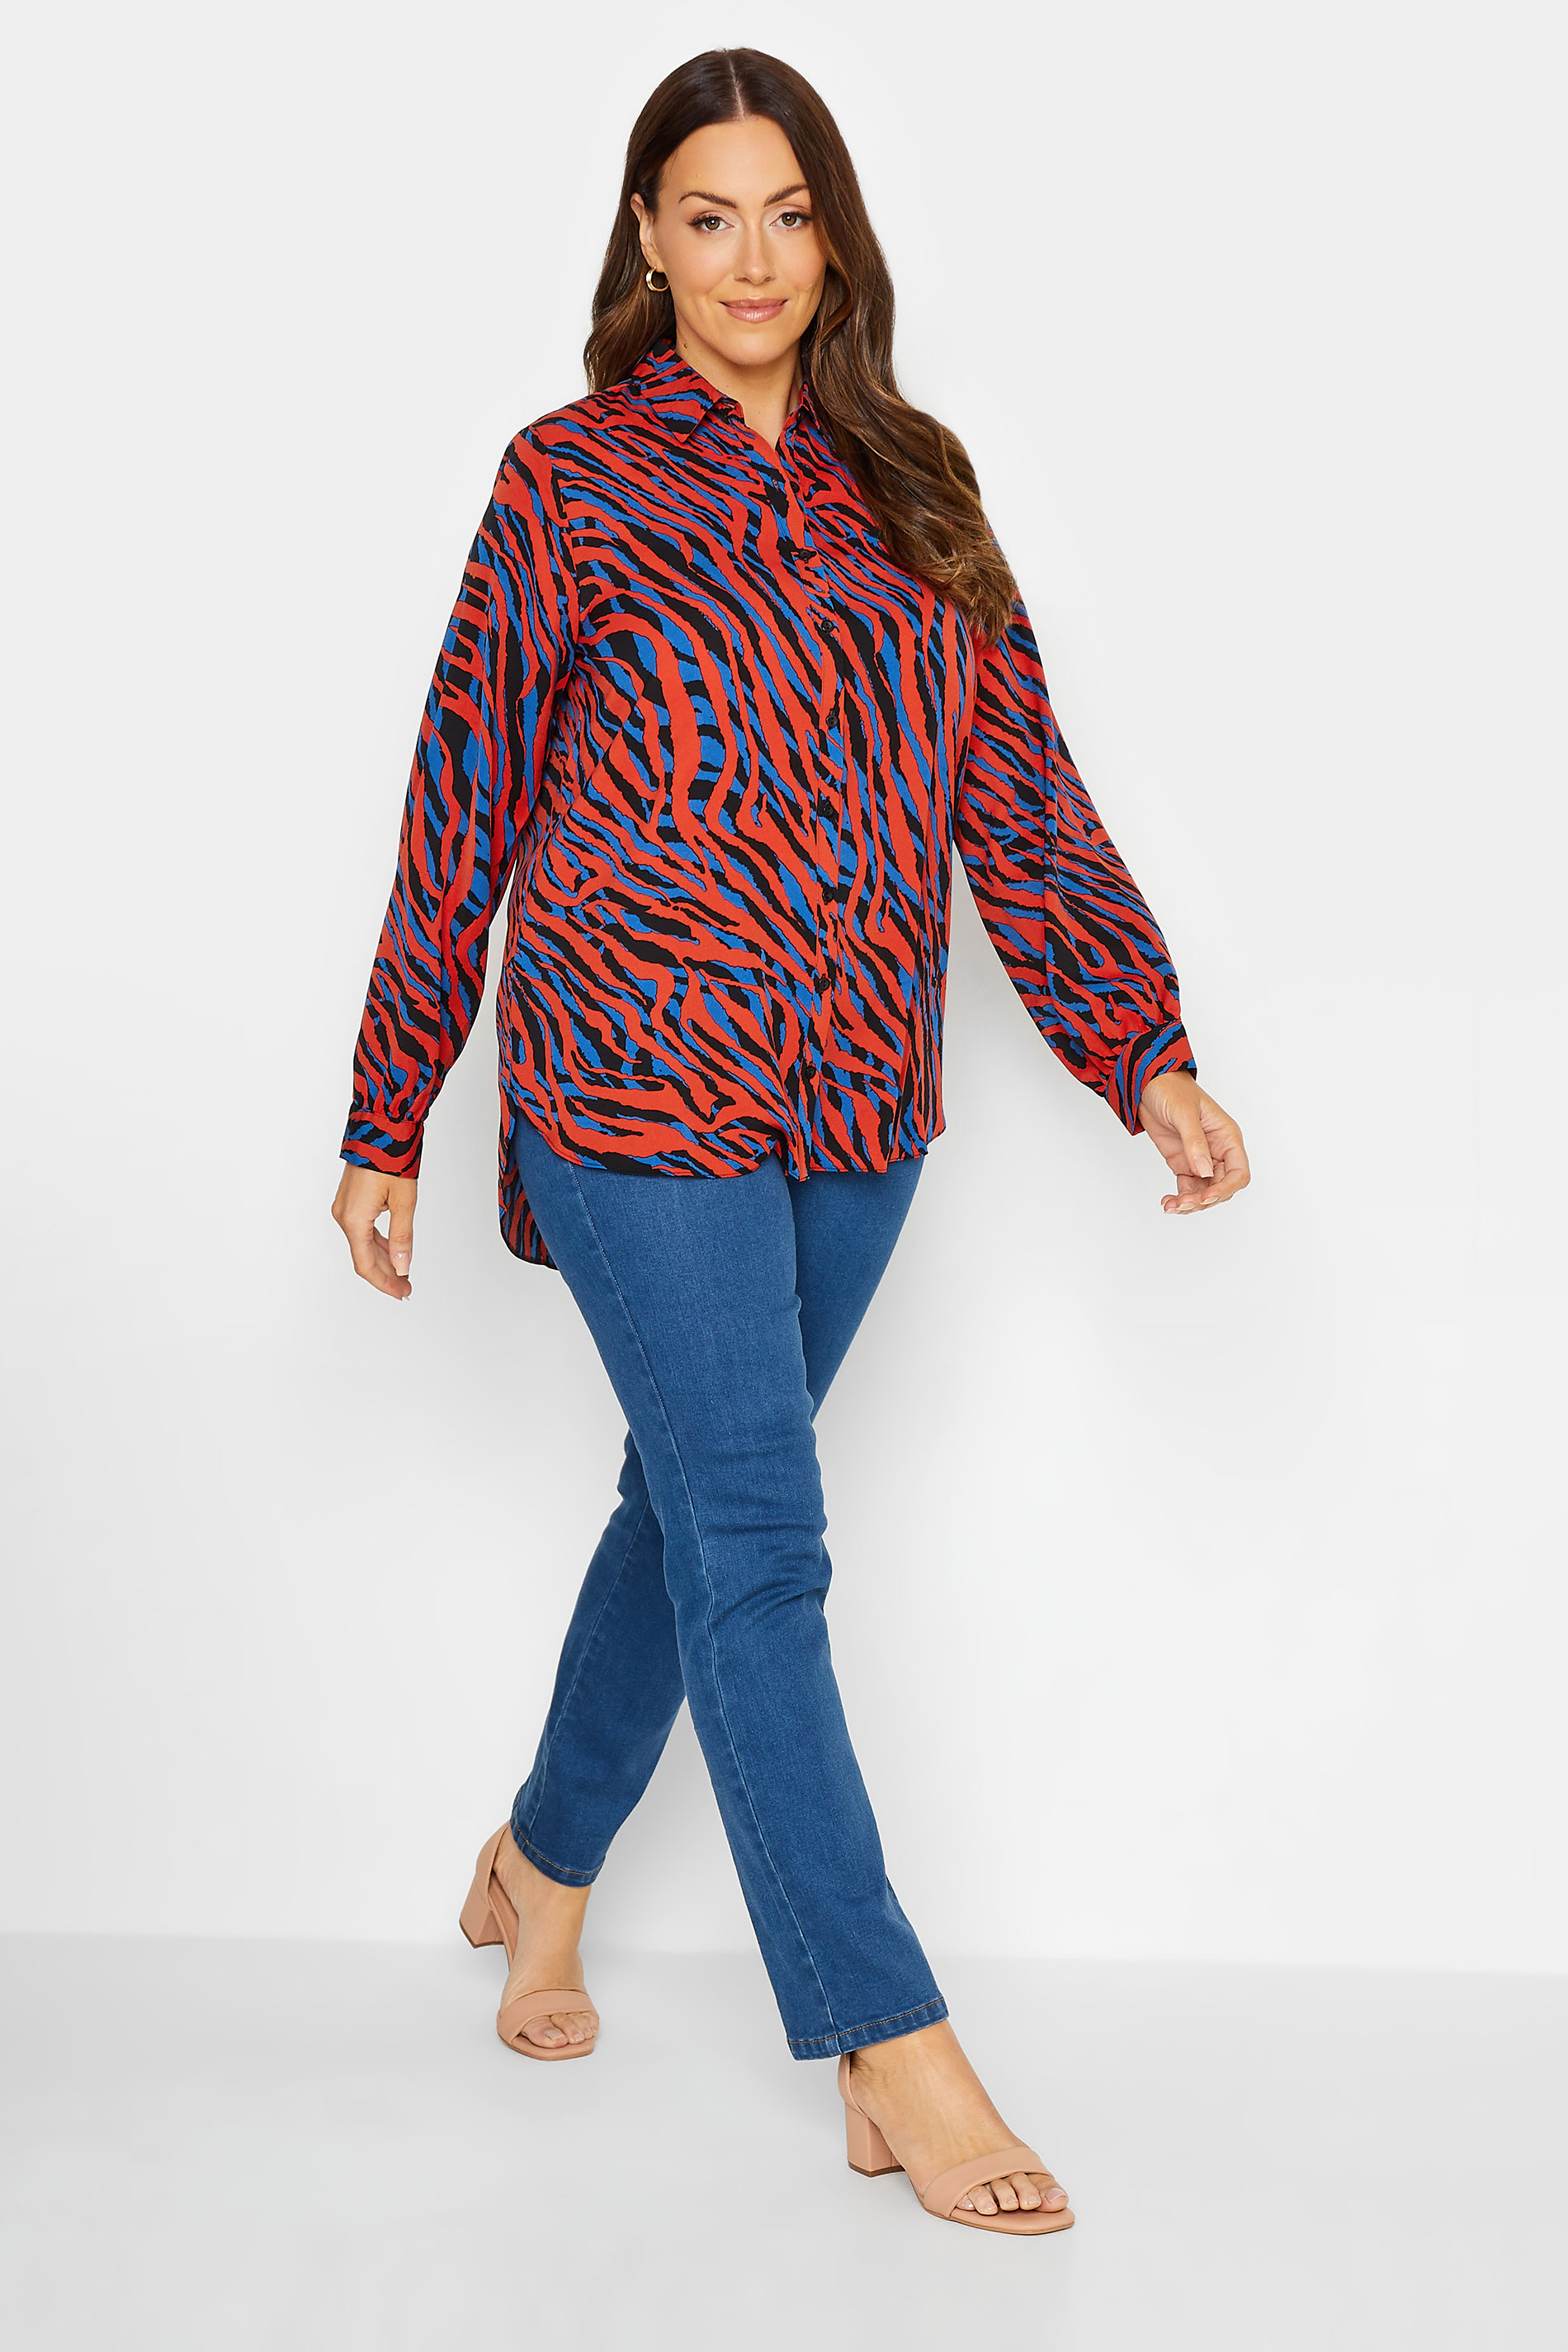 M&Co Red Zebra Print Long Sleeve Shirt | M&Co 2